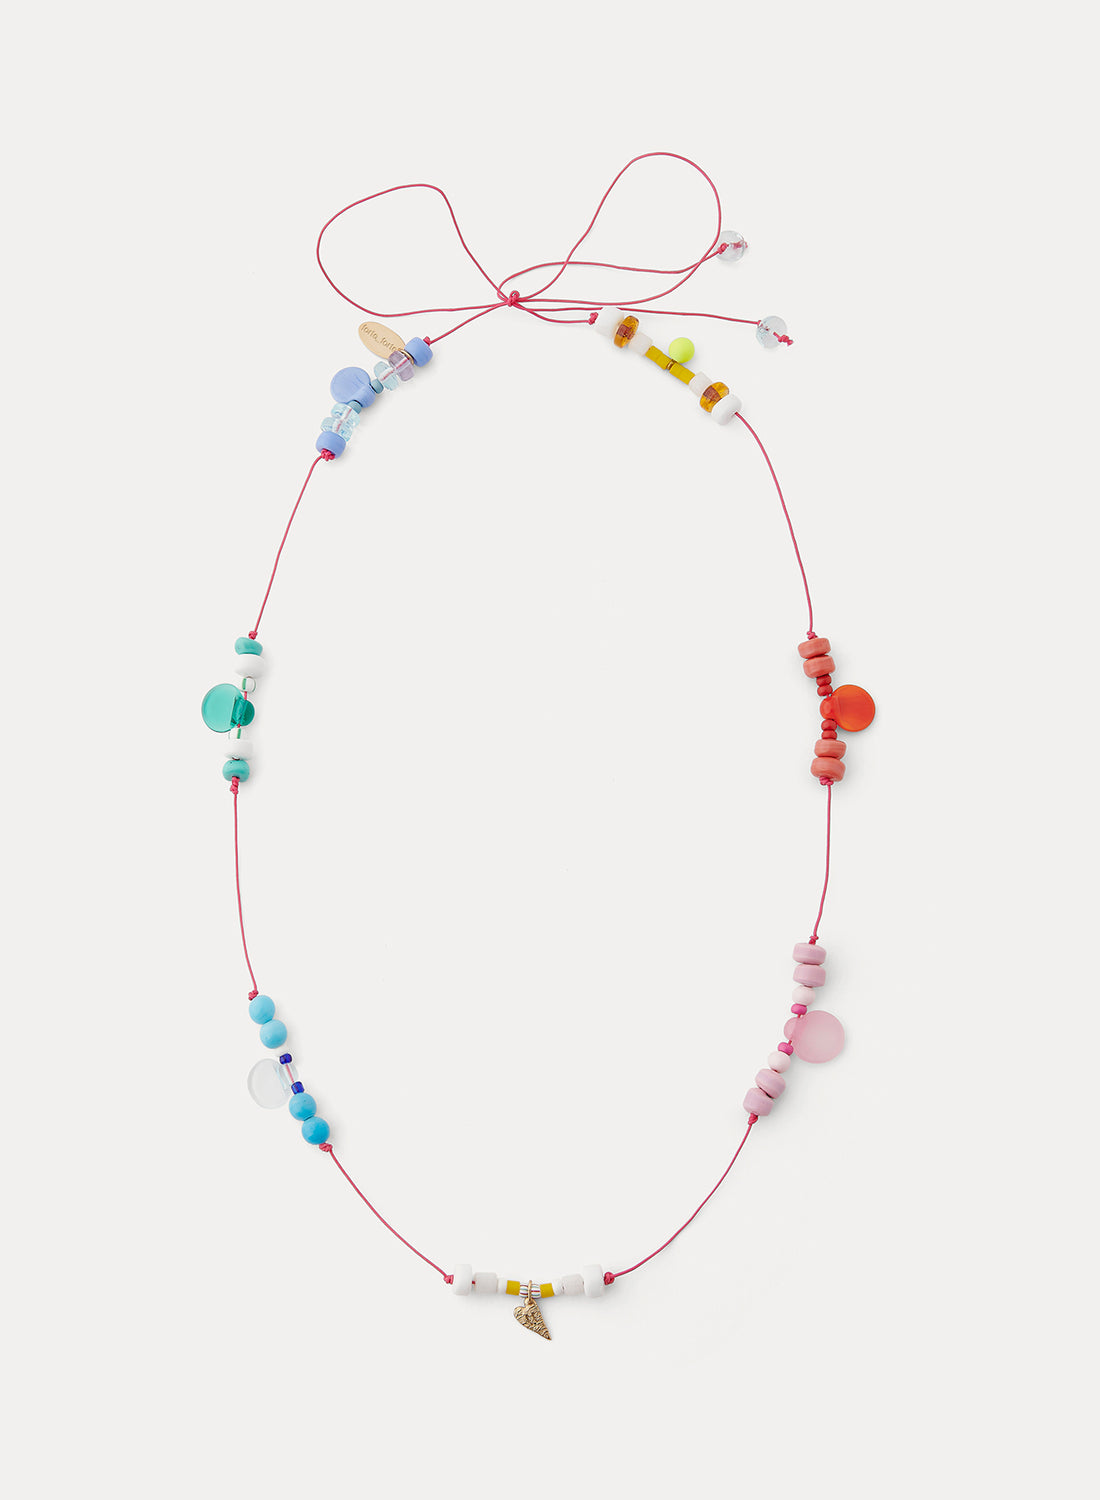 Pearl & Murano Glass Necklace